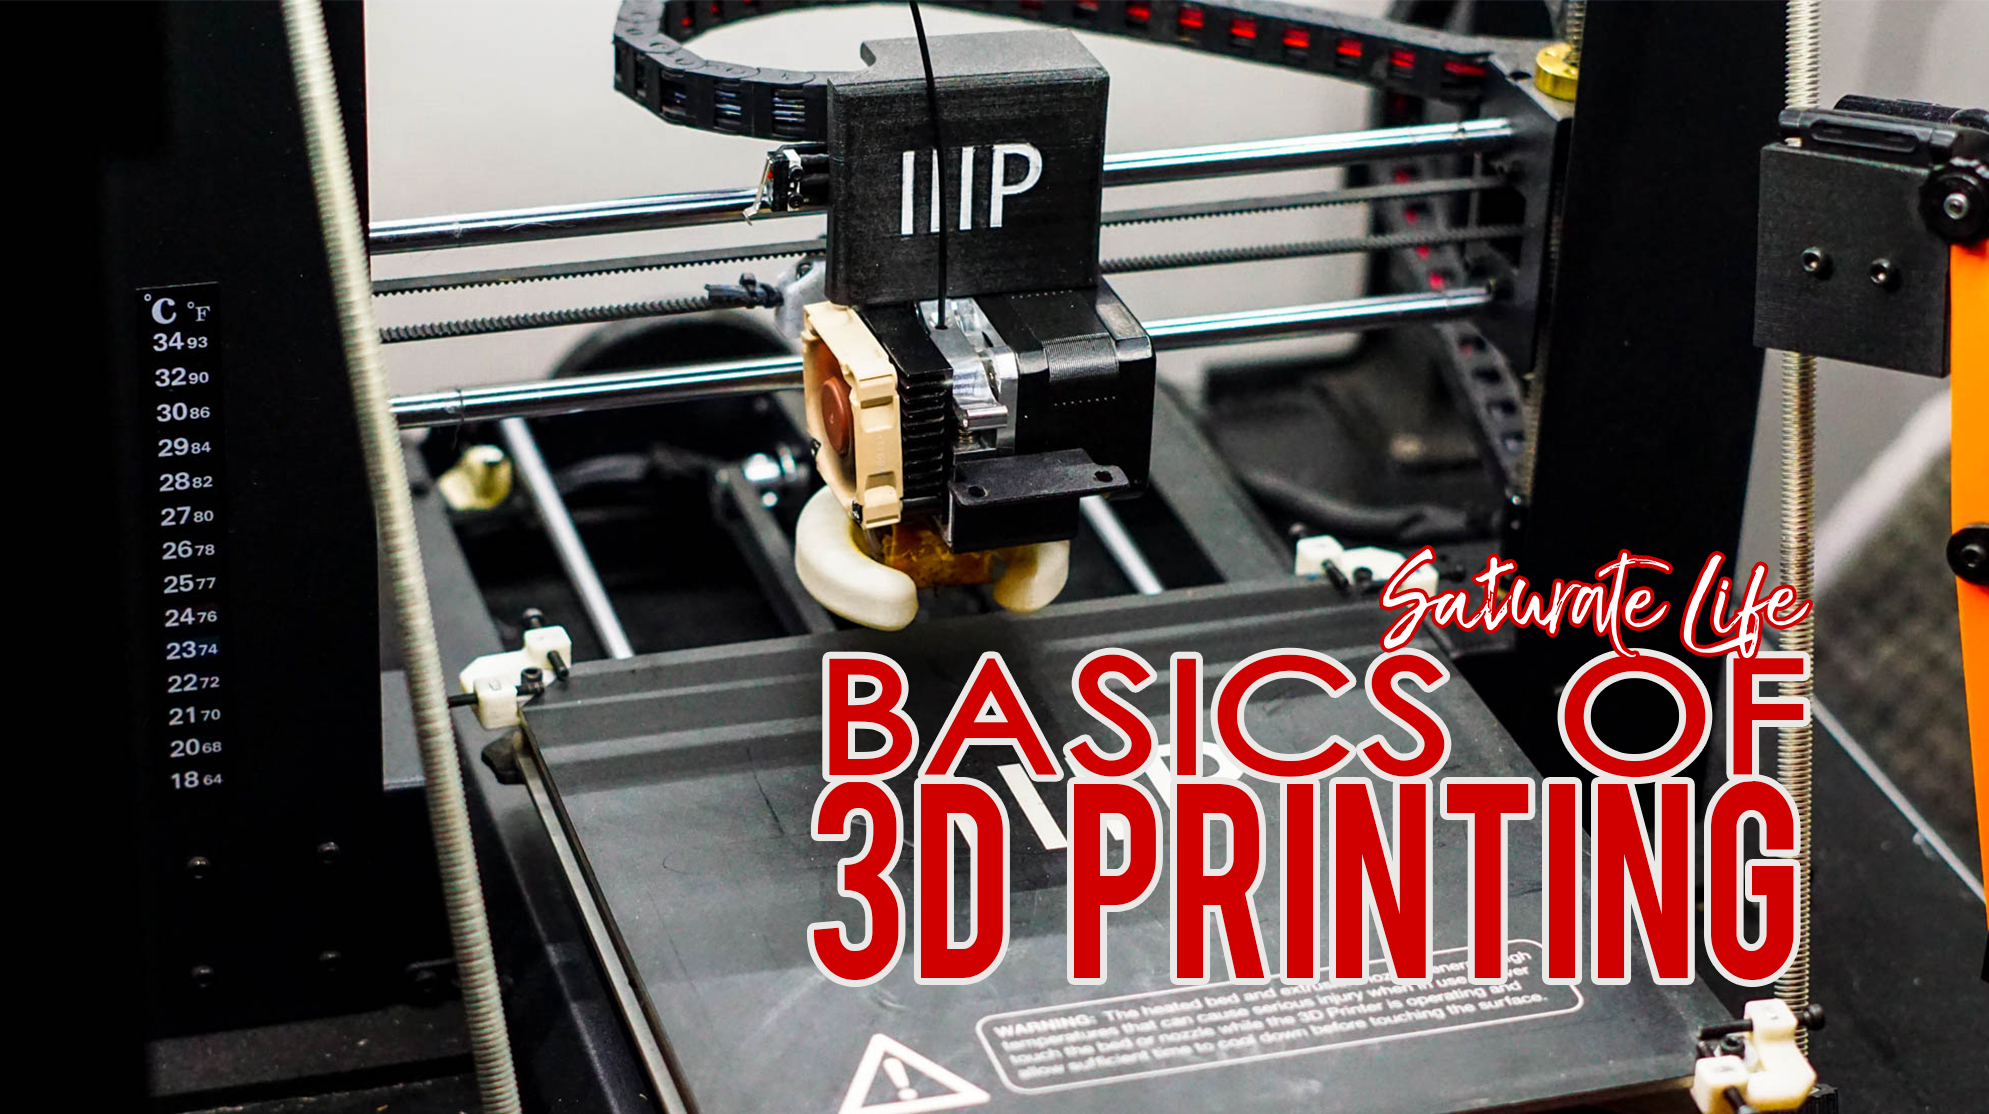 3D Printing Basics: Next Generation of DIY - Saturate Life